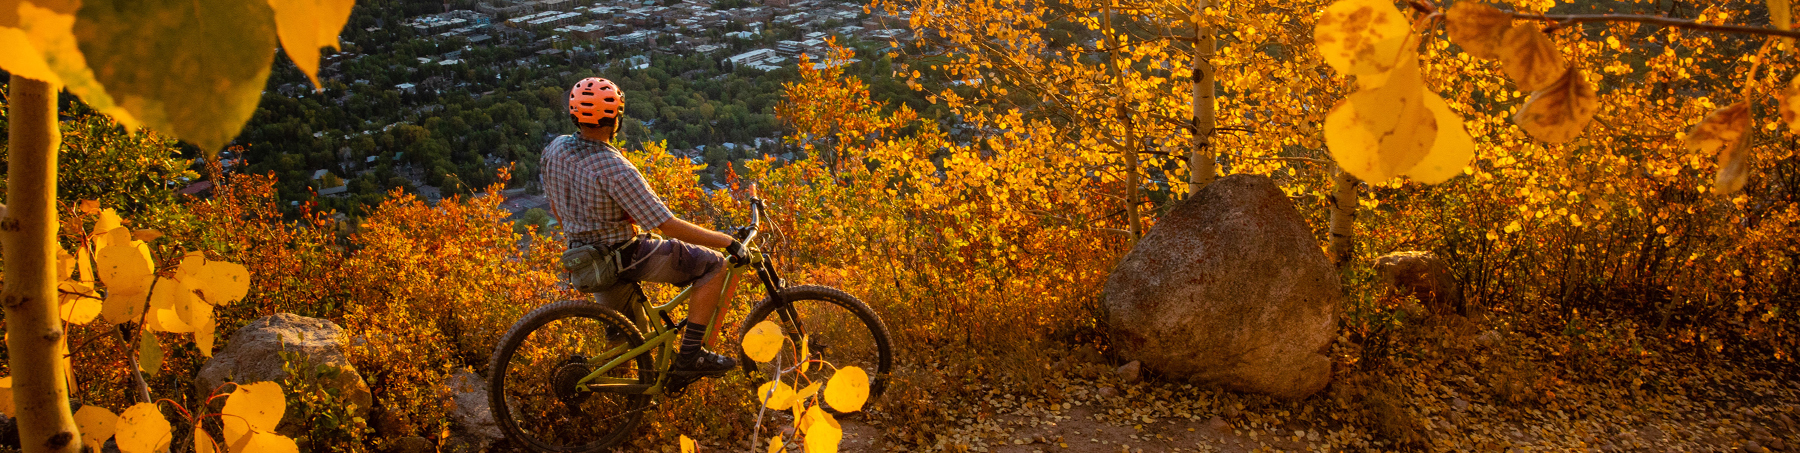 Golden Aspen foliage sets the mood for fall mountain biking